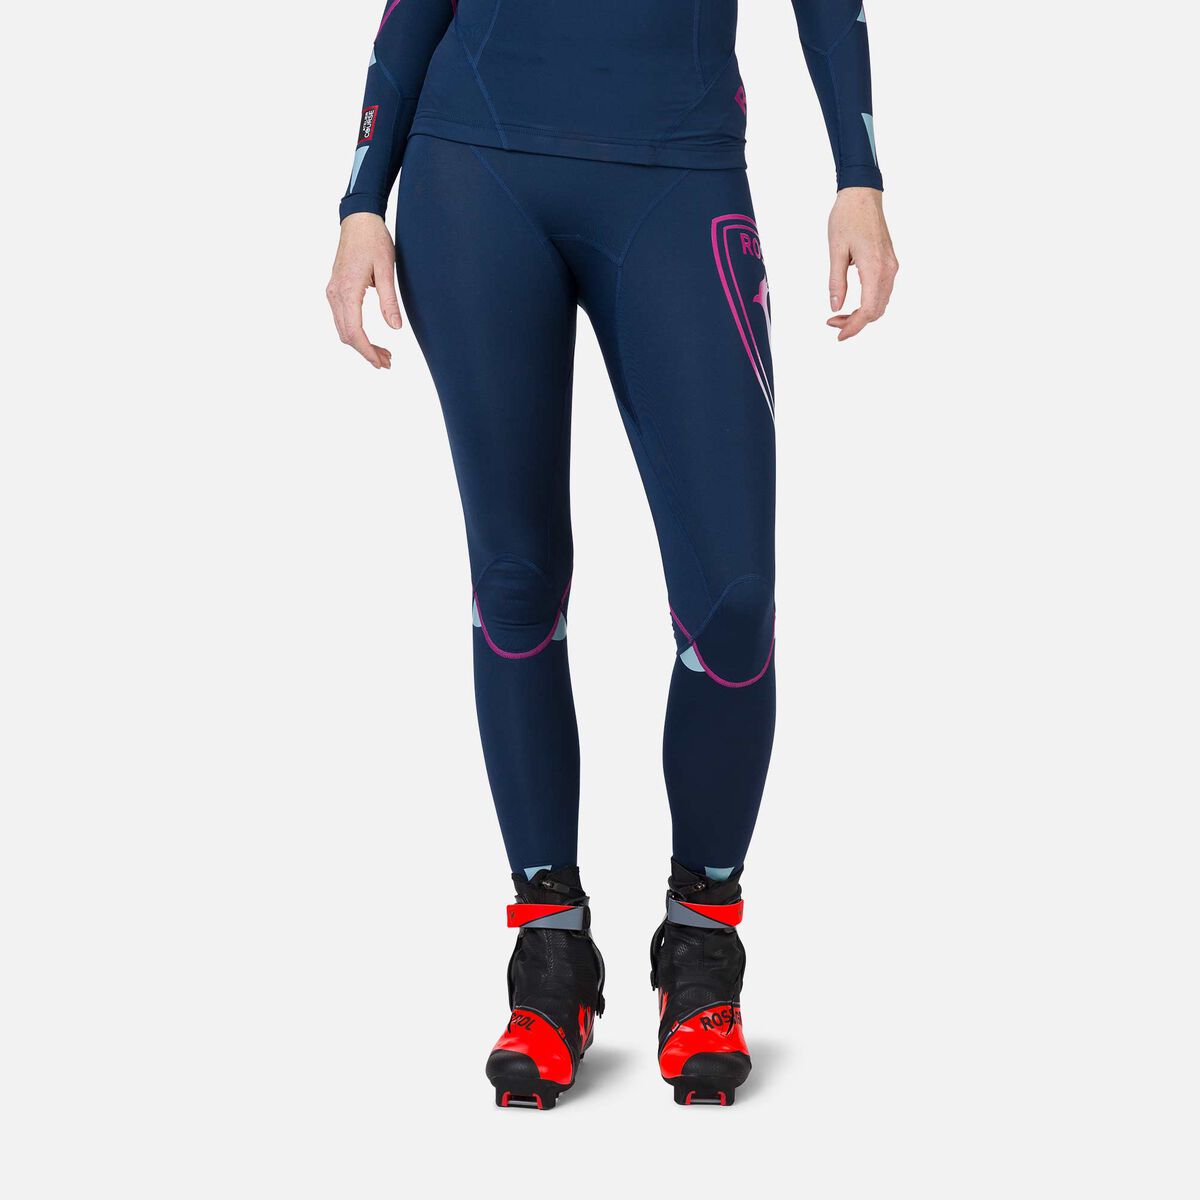 Women's Infini Compression Race Tights, Ski pants